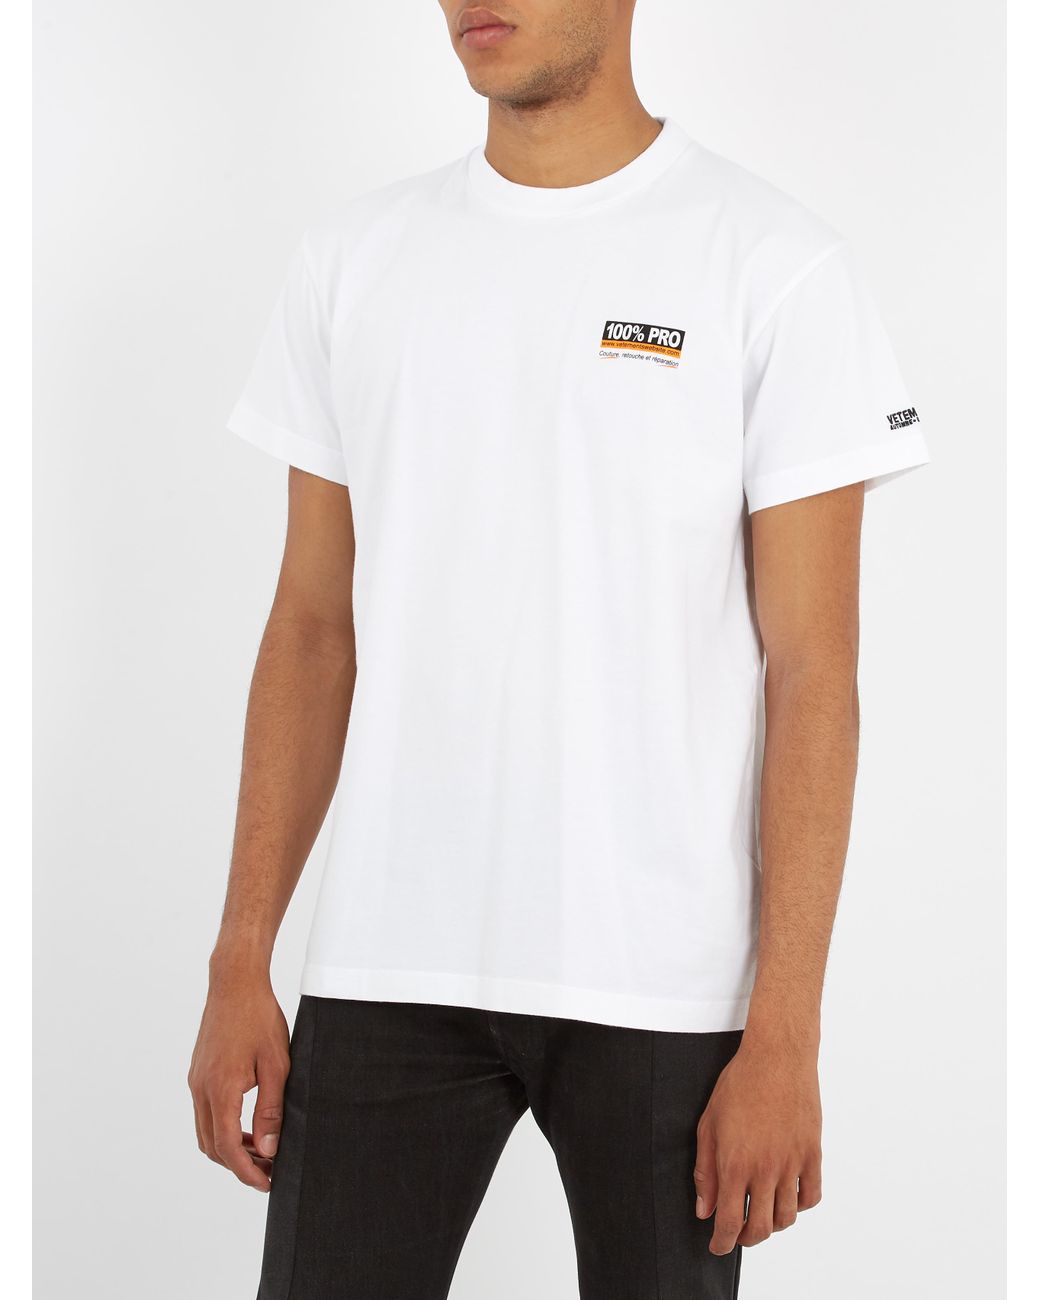 frisk sortere Bliv forvirret Vetements 100% Pro Cotton T-shirt in White for Men | Lyst Canada